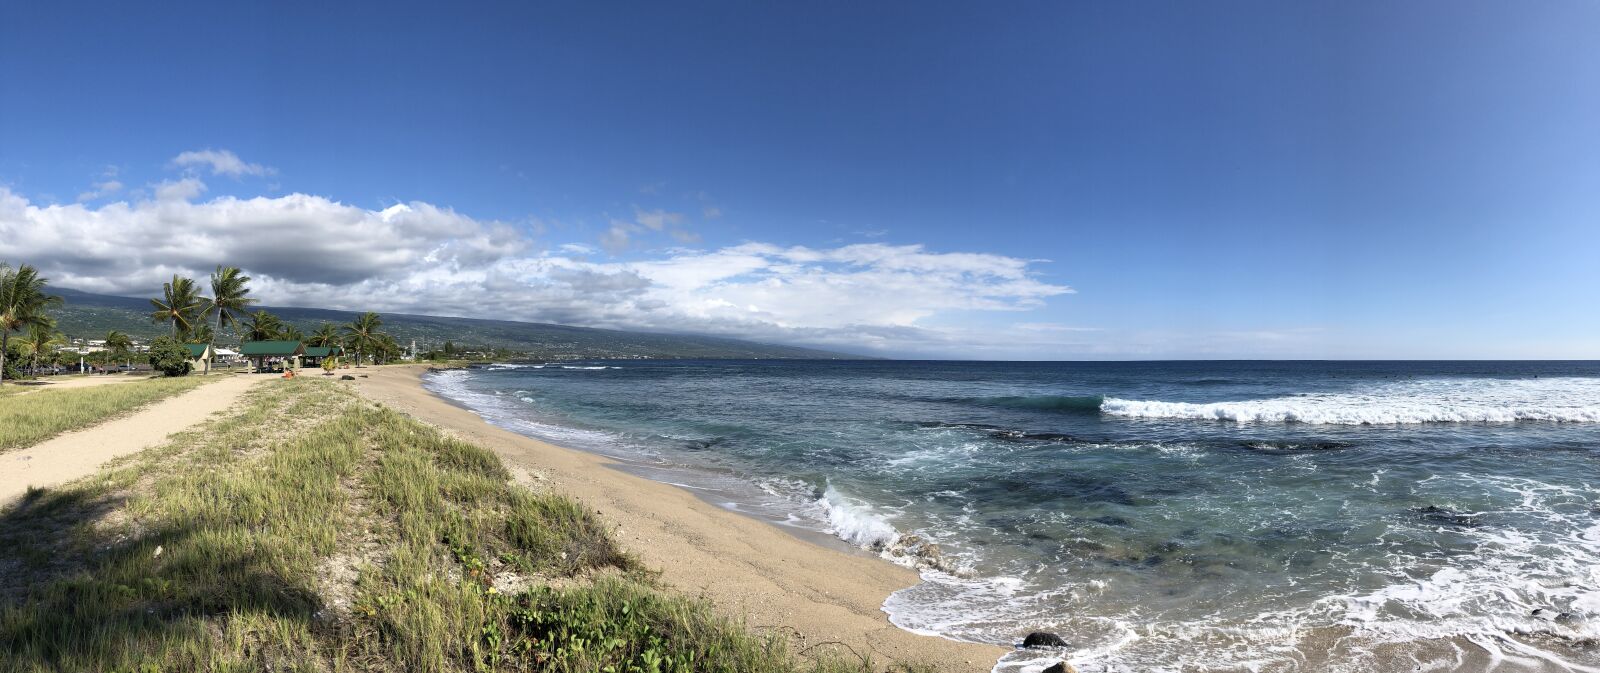 Apple iPhone X + iPhone X back camera 4mm f/1.8 sample photo. Hawaii, panorama, sea photography